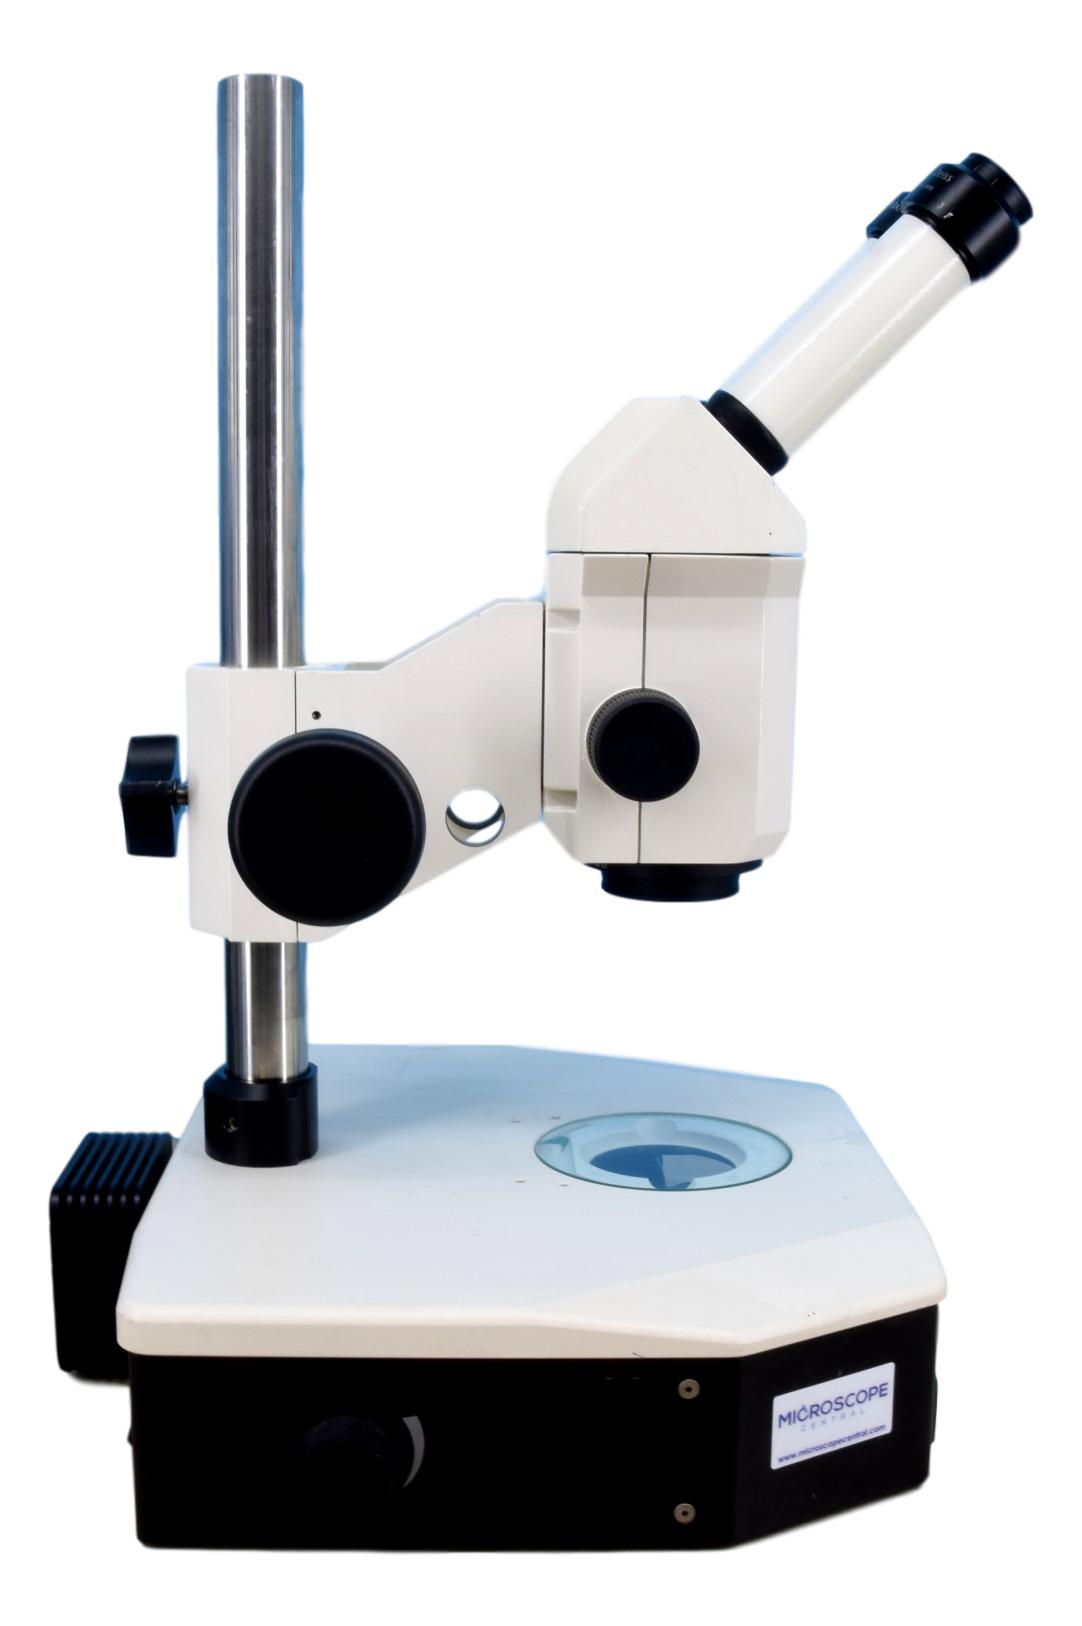 Stemi SV6 Microscope On Diagnostic Stand